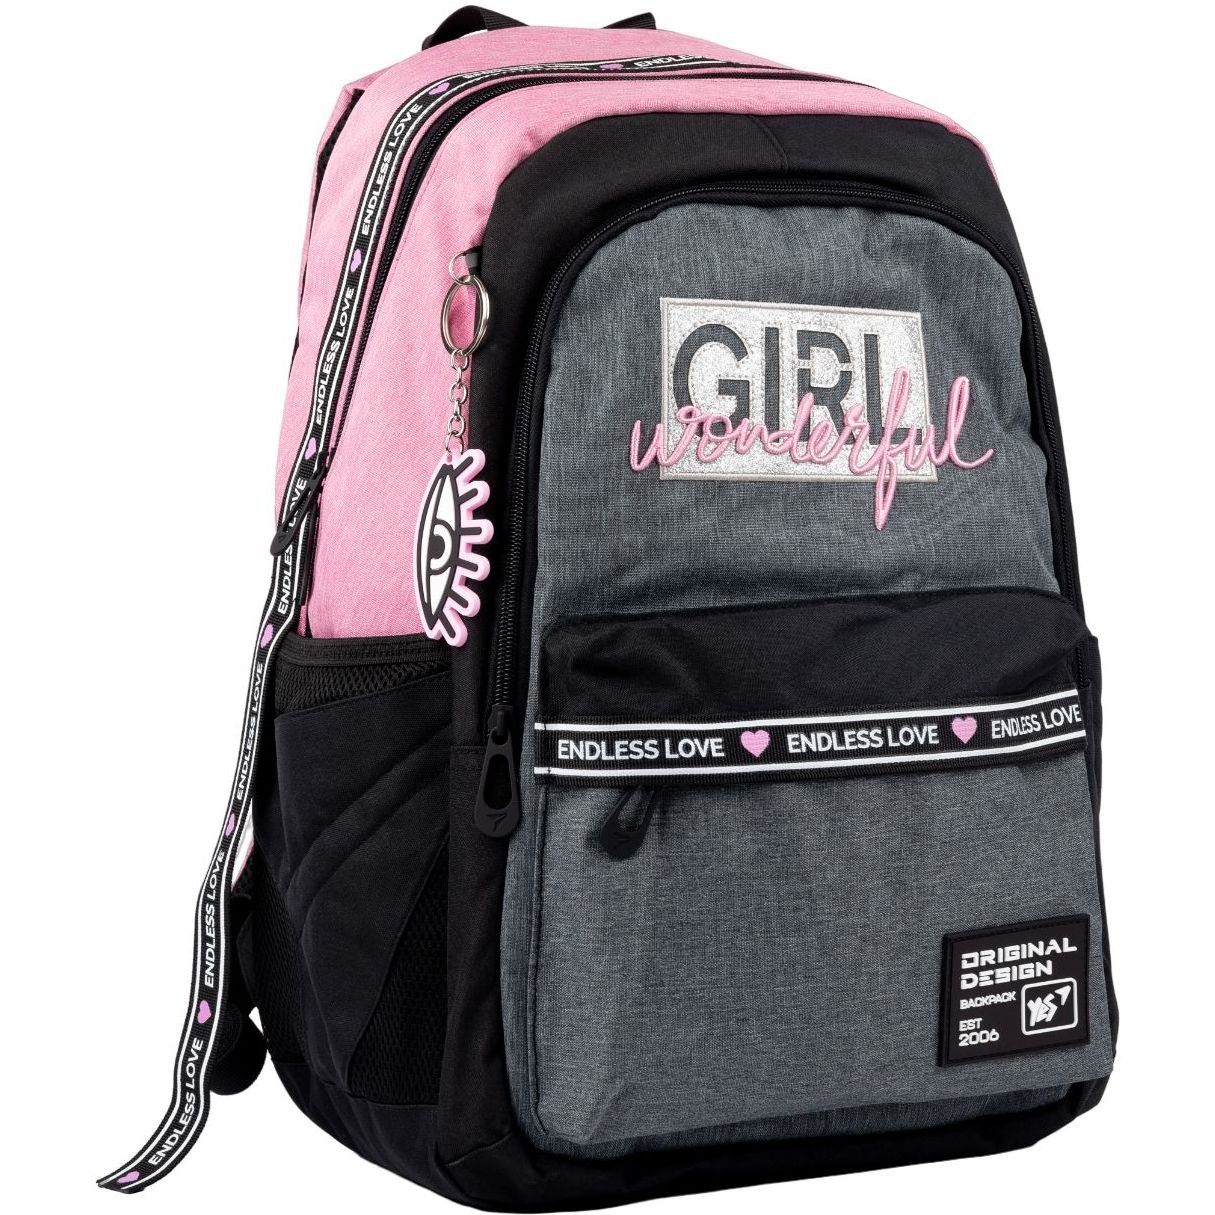 Рюкзак Yes TS-61 Girl Wonderful, черный с розовым (558908) - фото 2